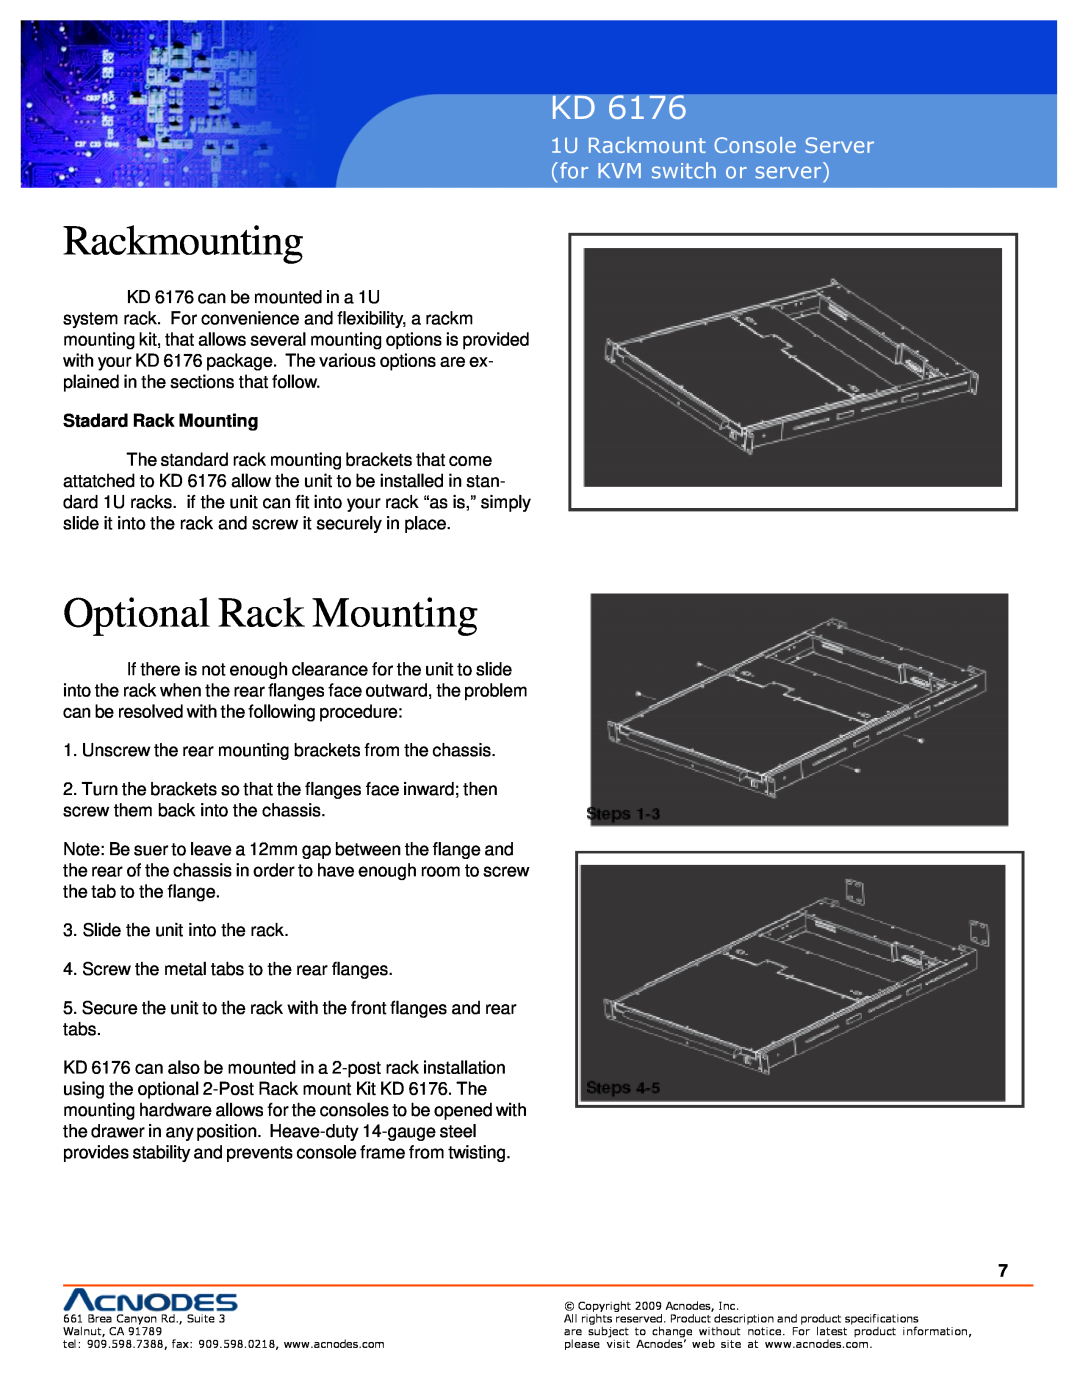 Acnodes KD 6176 user manual Rackmounting, Optional Rack Mounting, Stadard Rack Mounting 